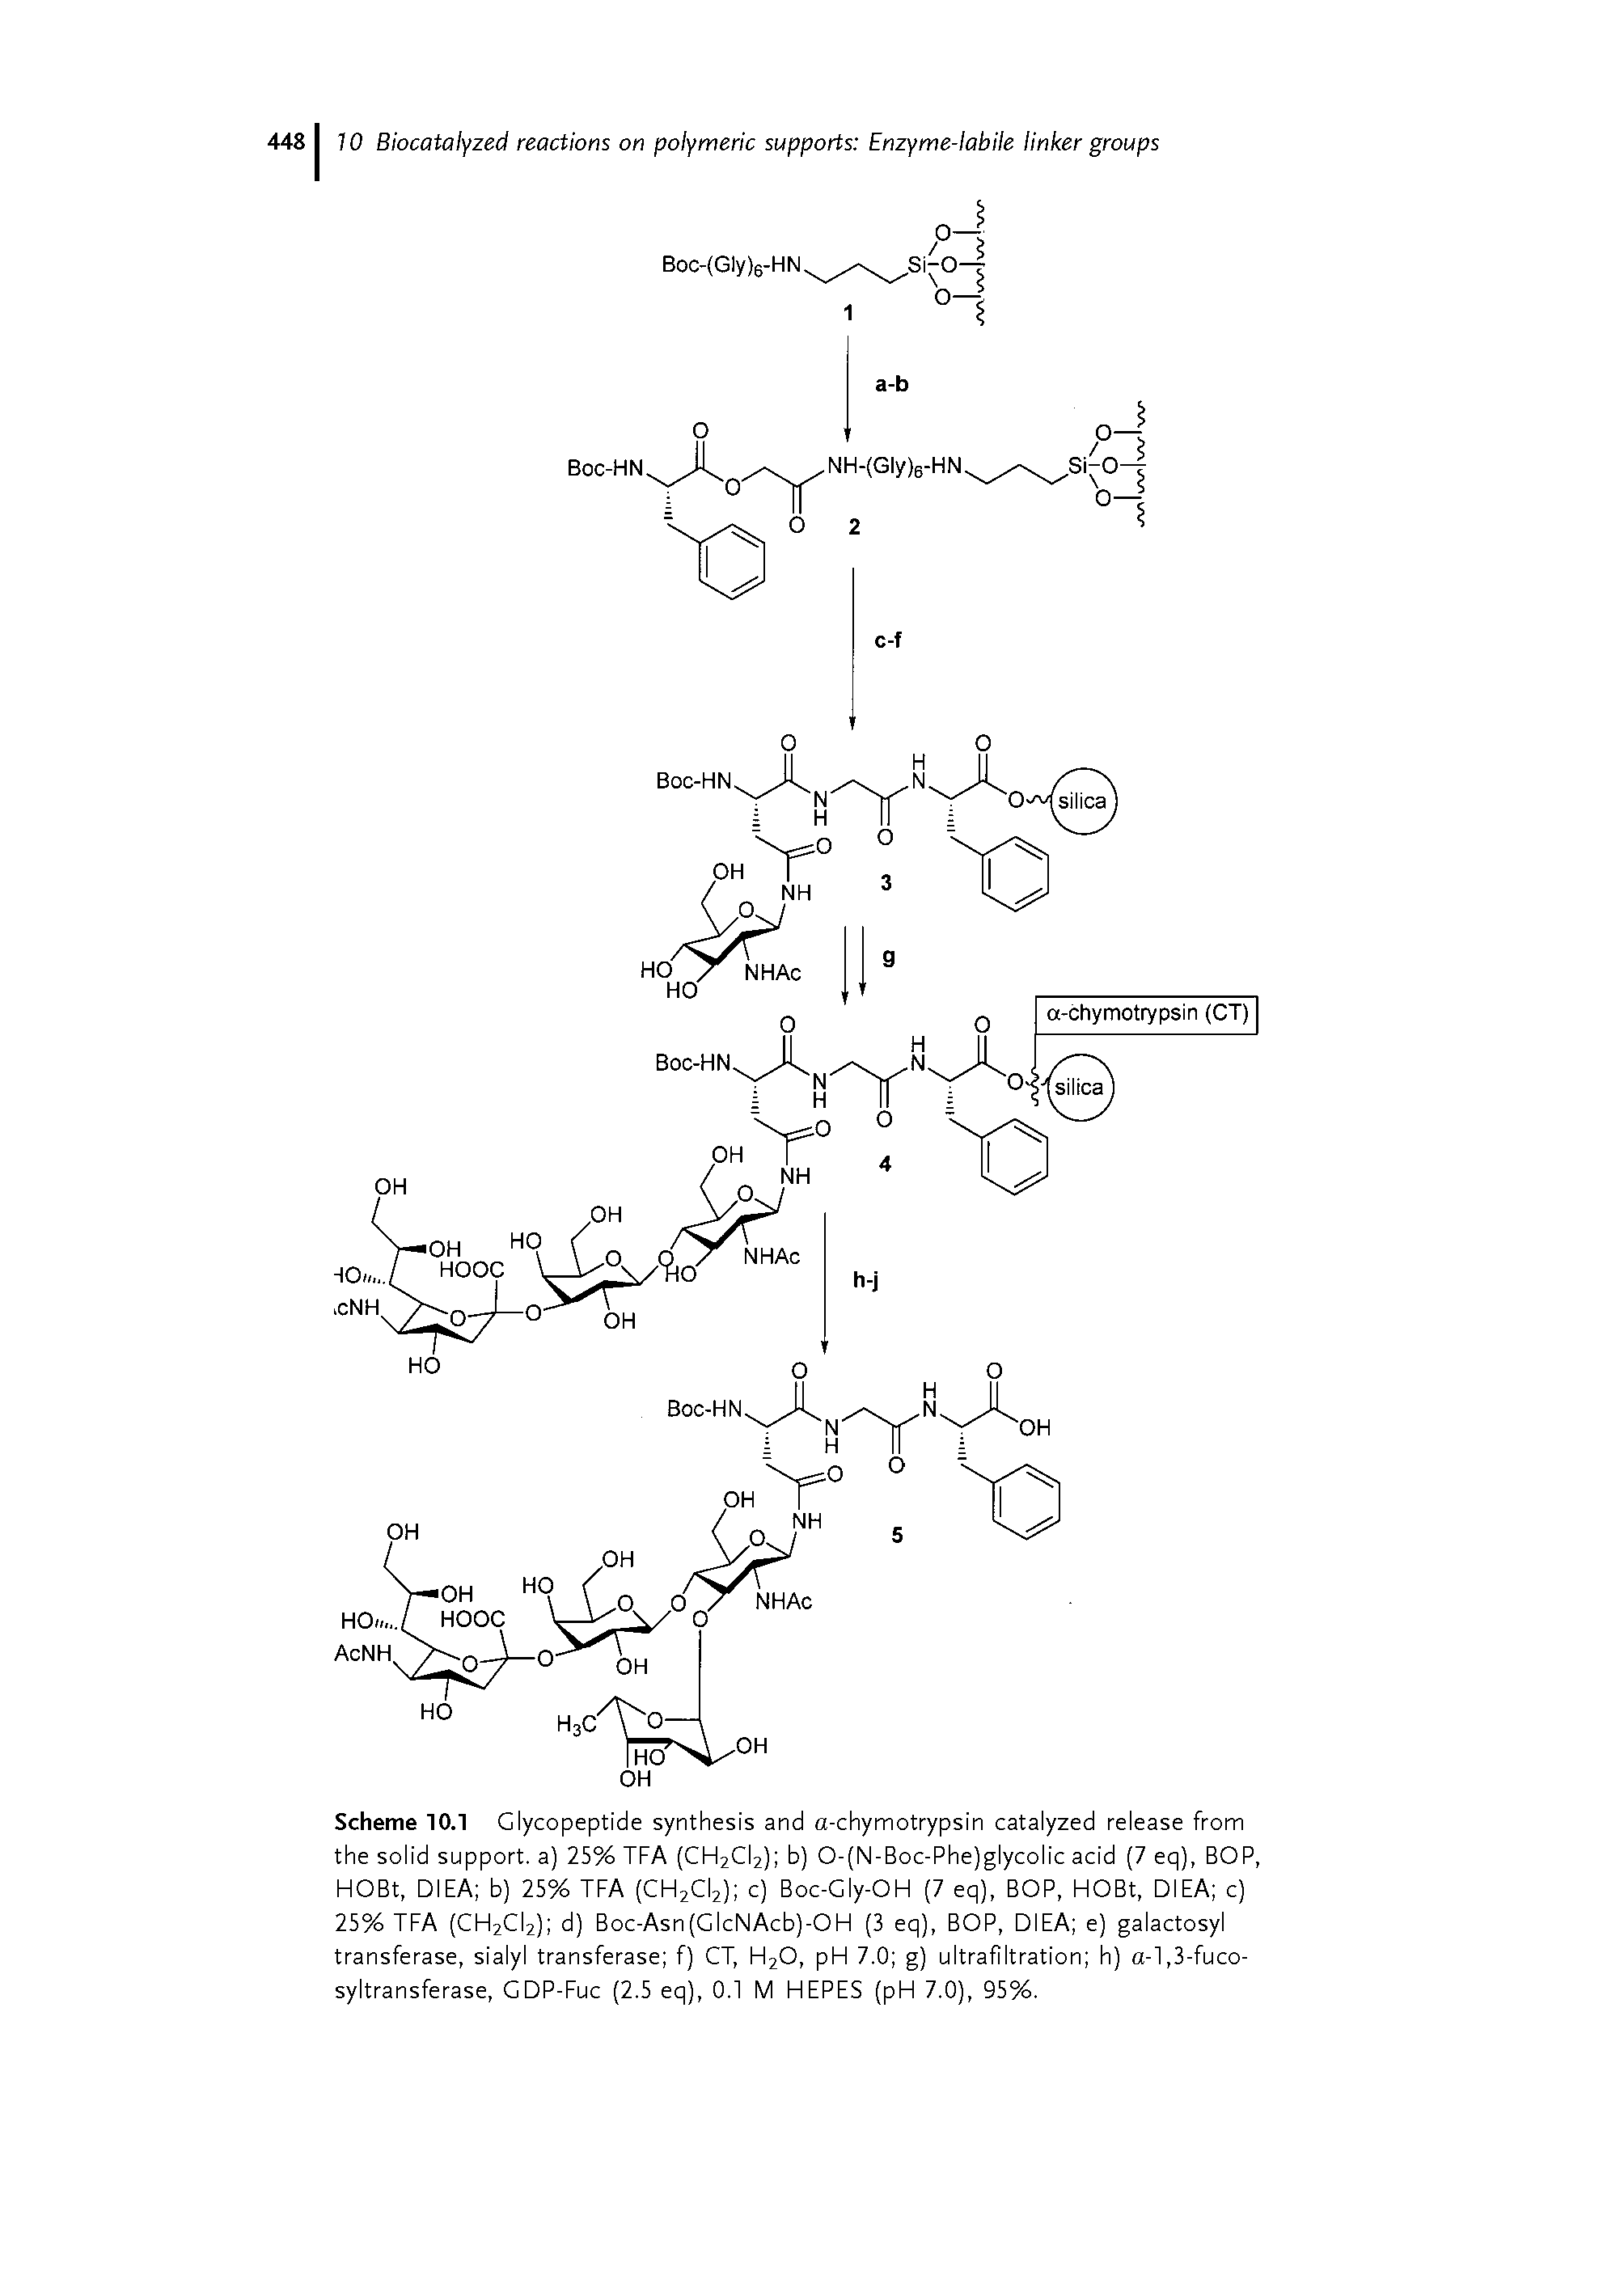 Scheme 10.1 Glycopeptide synthesis and a-chymotrypsin catalyzed release from the solid support, a) 25% TFA (CH2CI2) b) 0-(N-Boc-Phe)glycolic acid (7 eq), BOP, HOBt, DIEA b) 25% TFA (CH2CI2) c) Boc-Gly-OH (7 eq), BOP, HOBt, DIEA c) 25% TFA (CH2CI2) d) Boc-Asn(GlcNAcb)-OH (3 eq), BOP, DIEA e) galactosyl transferase, sialyl transferase f) CT, H2O, pH 7.0 g) ultrafiltration h) a-l,3-fuco-syltransferase, GDP-Fuc (2.5 eq), 0.1 M HEPES (pH 7.0), 95%.